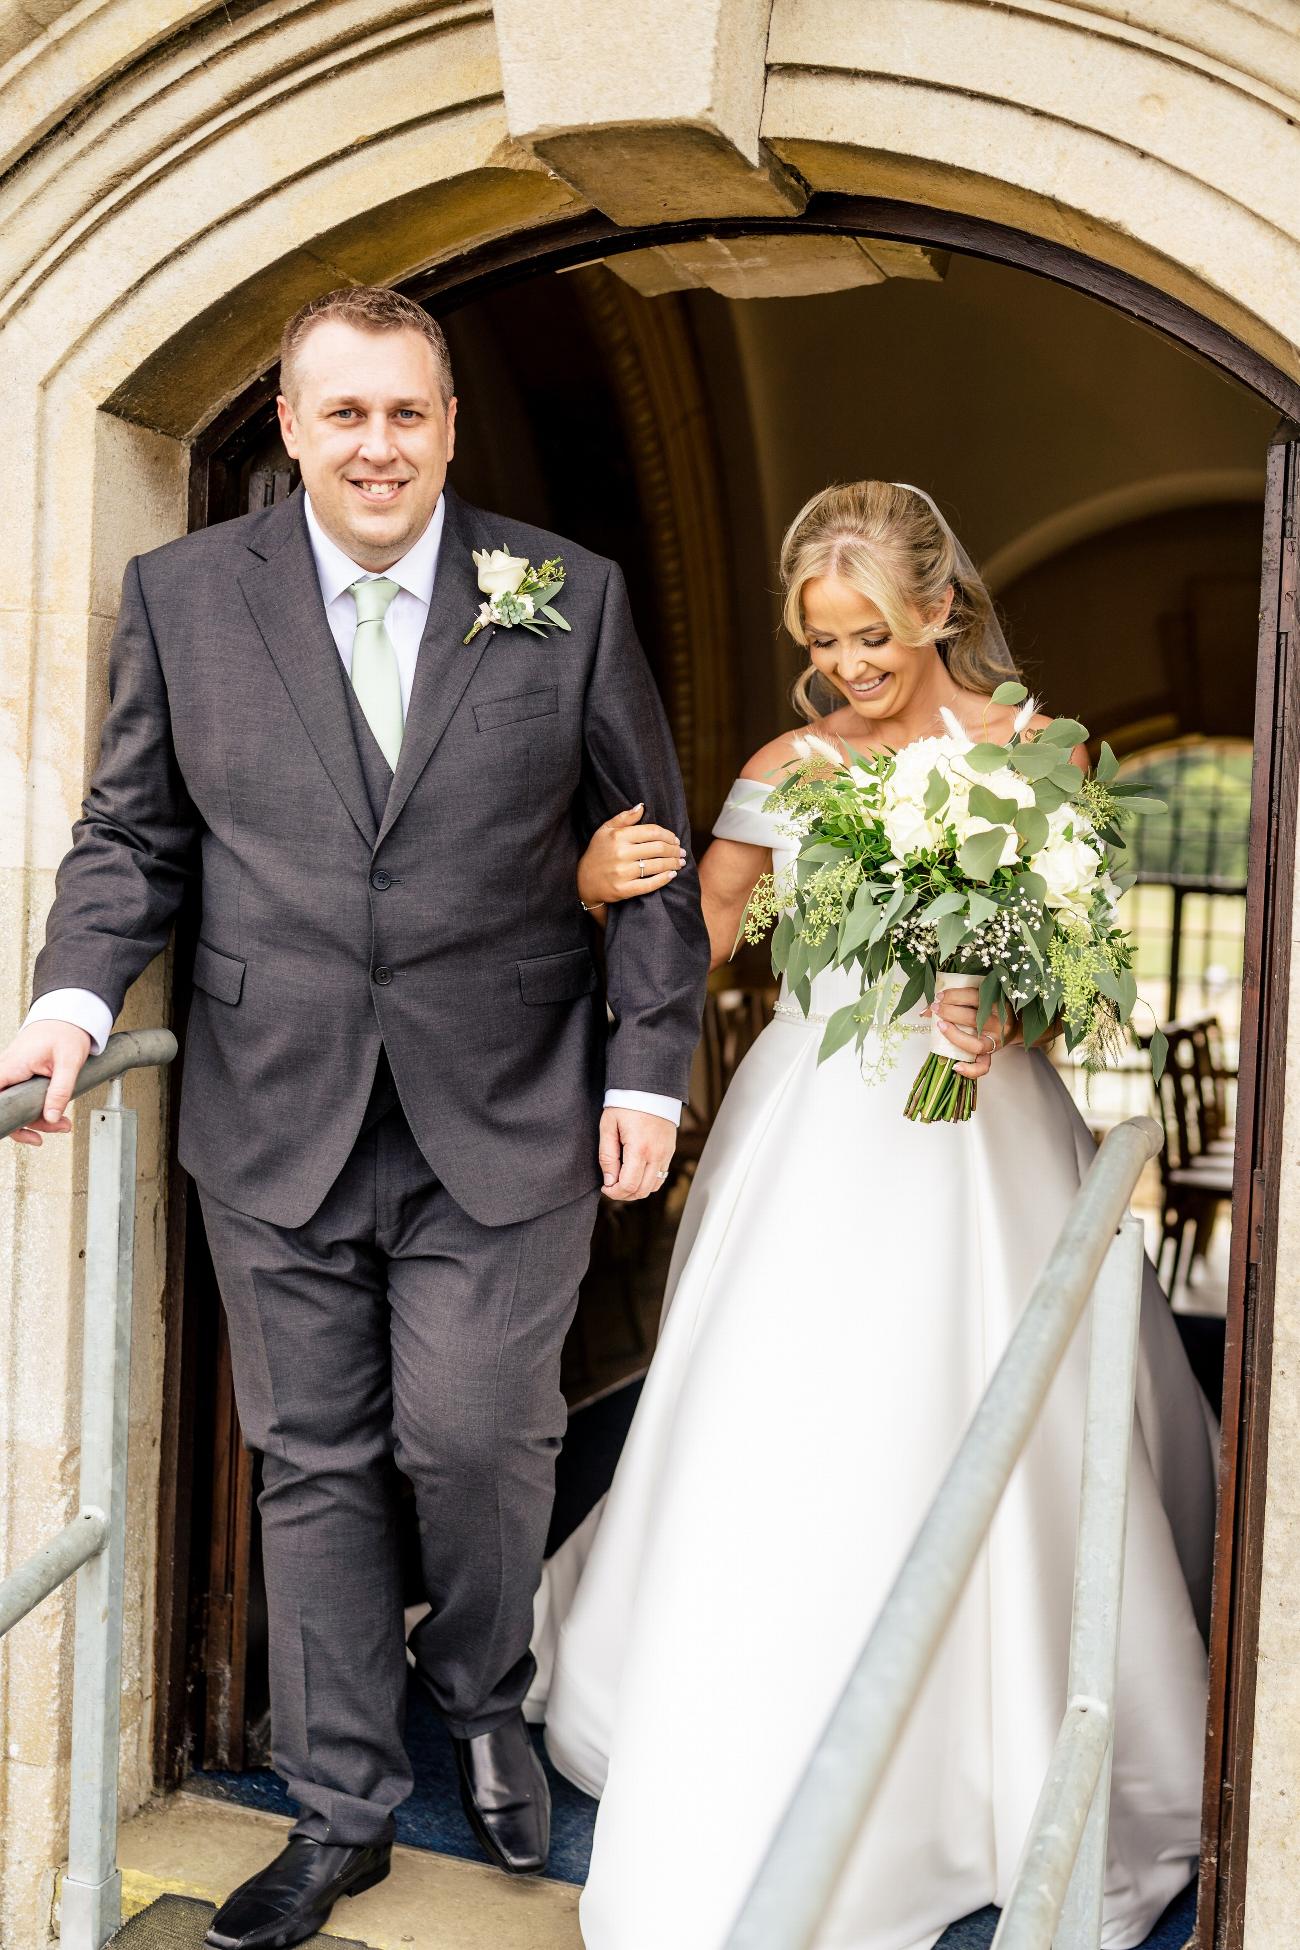 Mr & Mrs Barwell Wedding at Greetham Valley - 23.07.22 | weddings northa gallery image 3